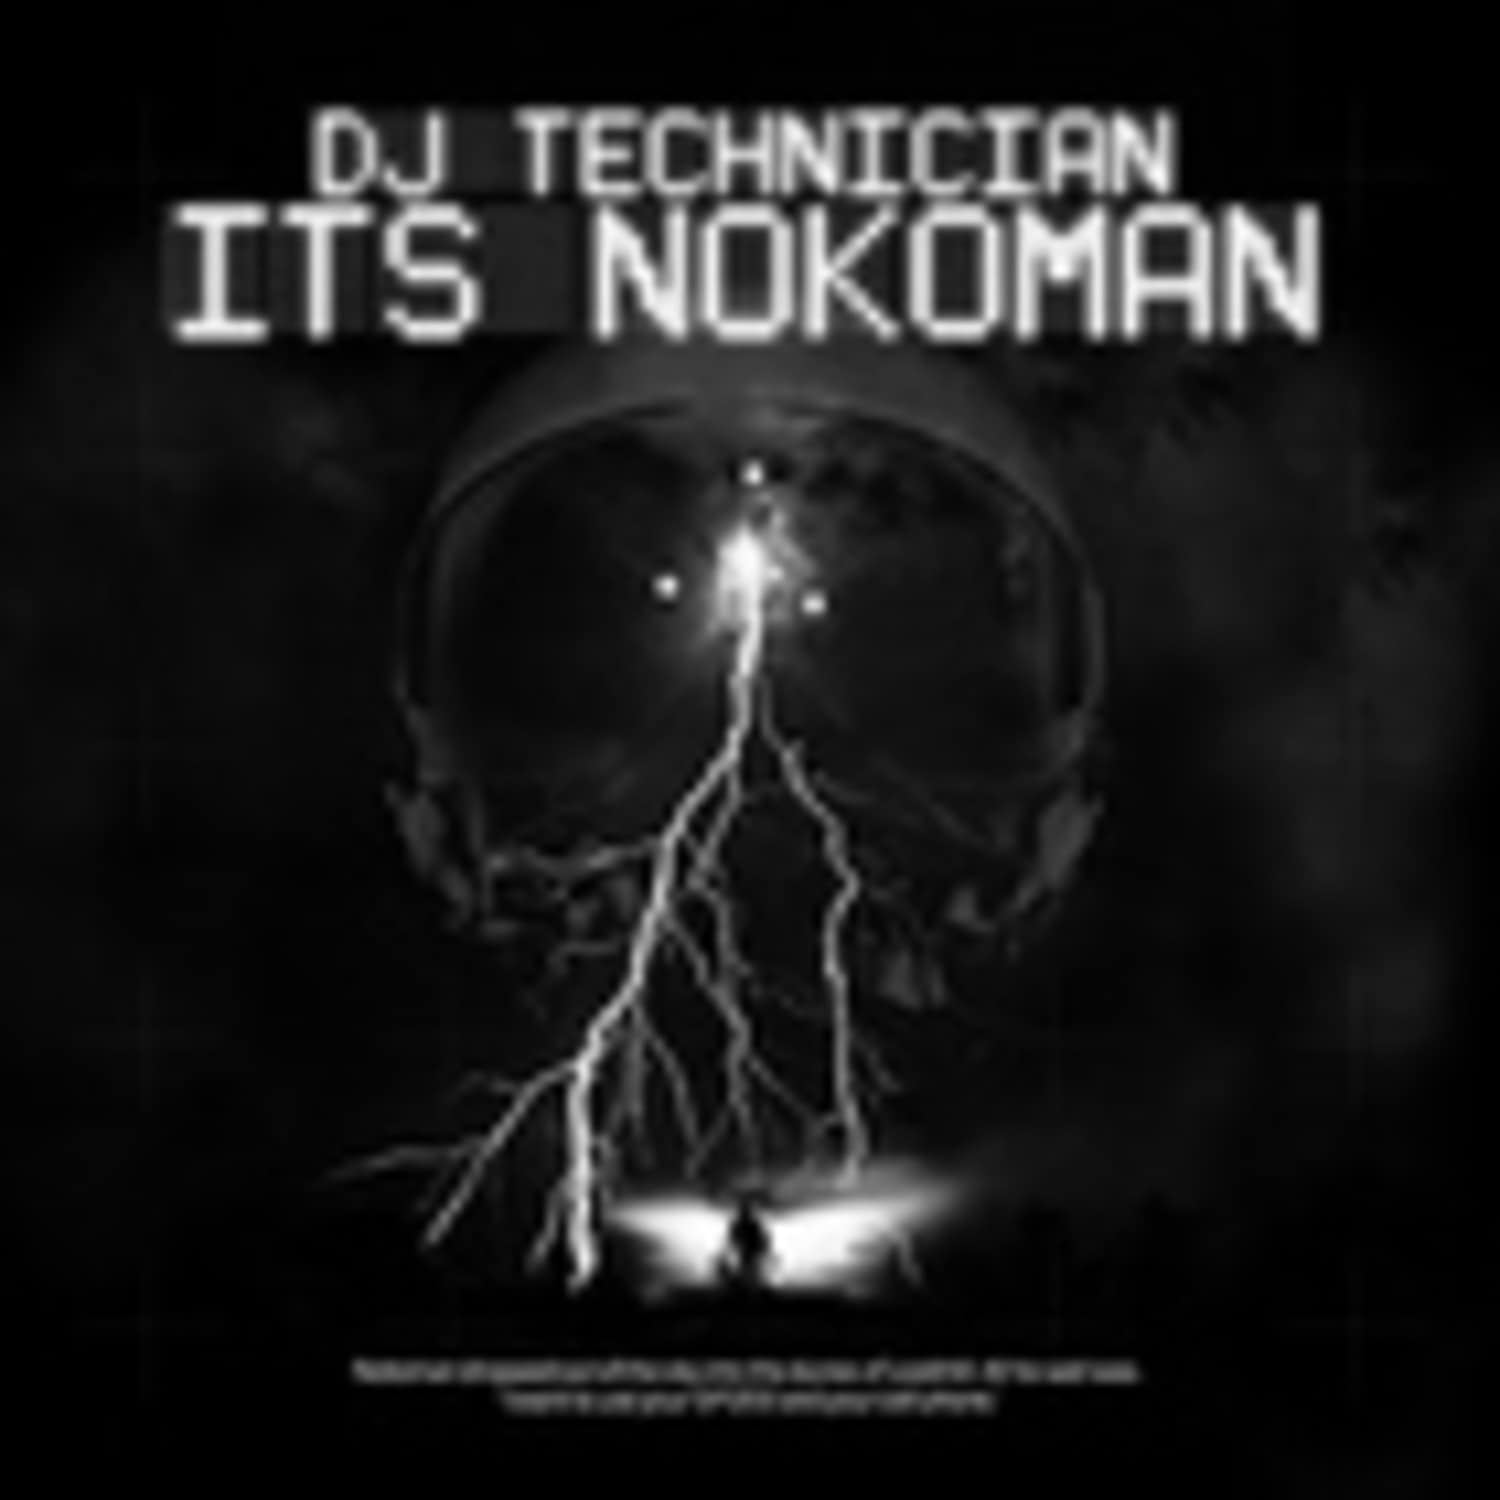 DJ Technician - ITS NOKOMAN